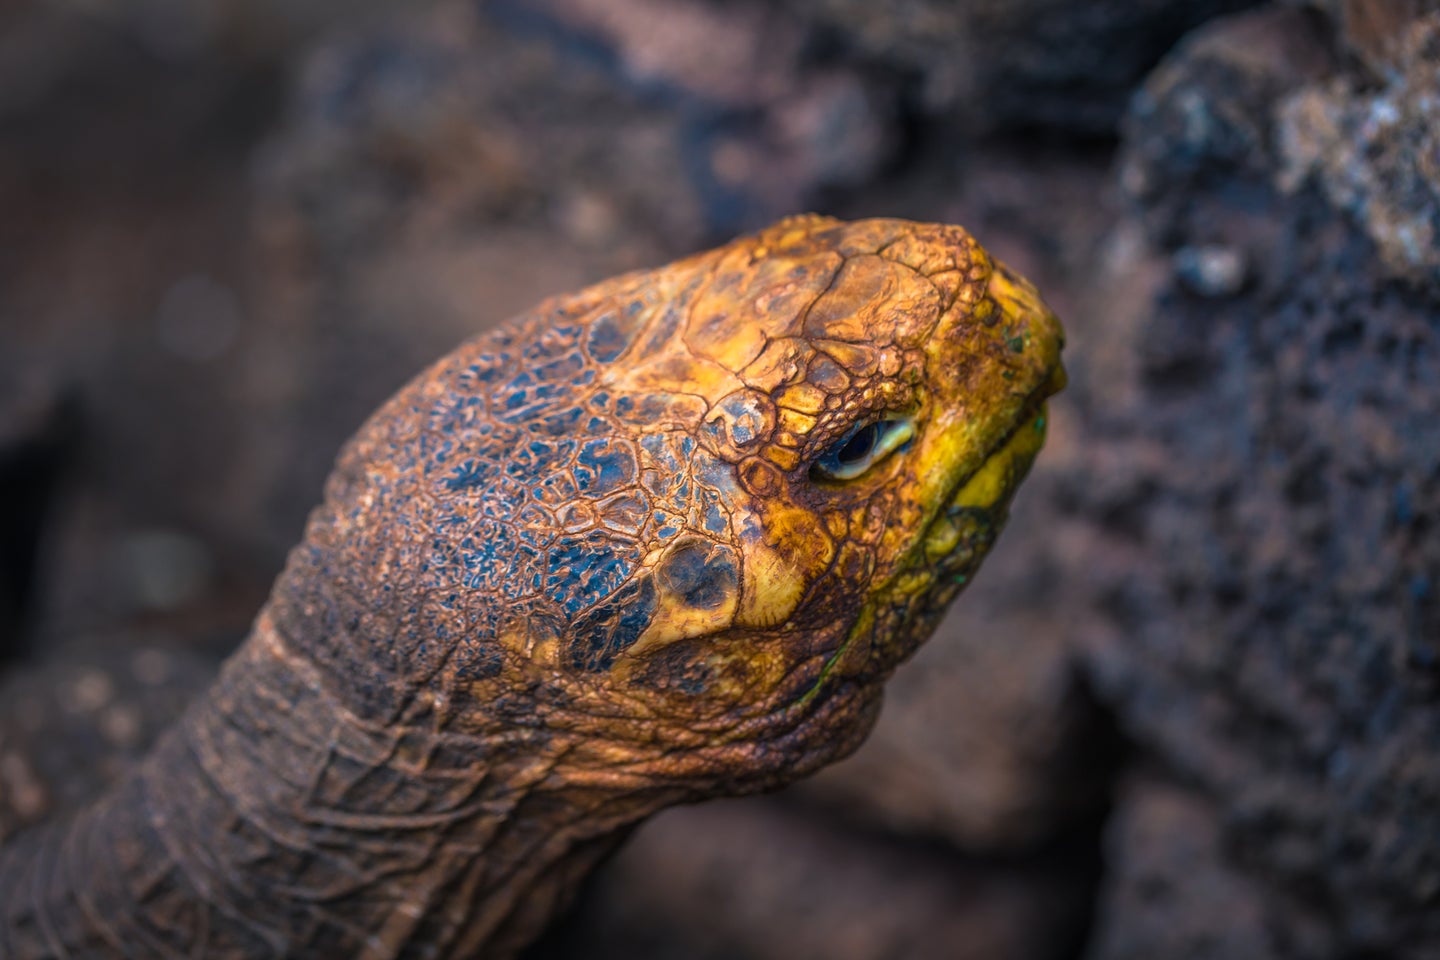 Diego the giant tortoise at a captive-breeding facility